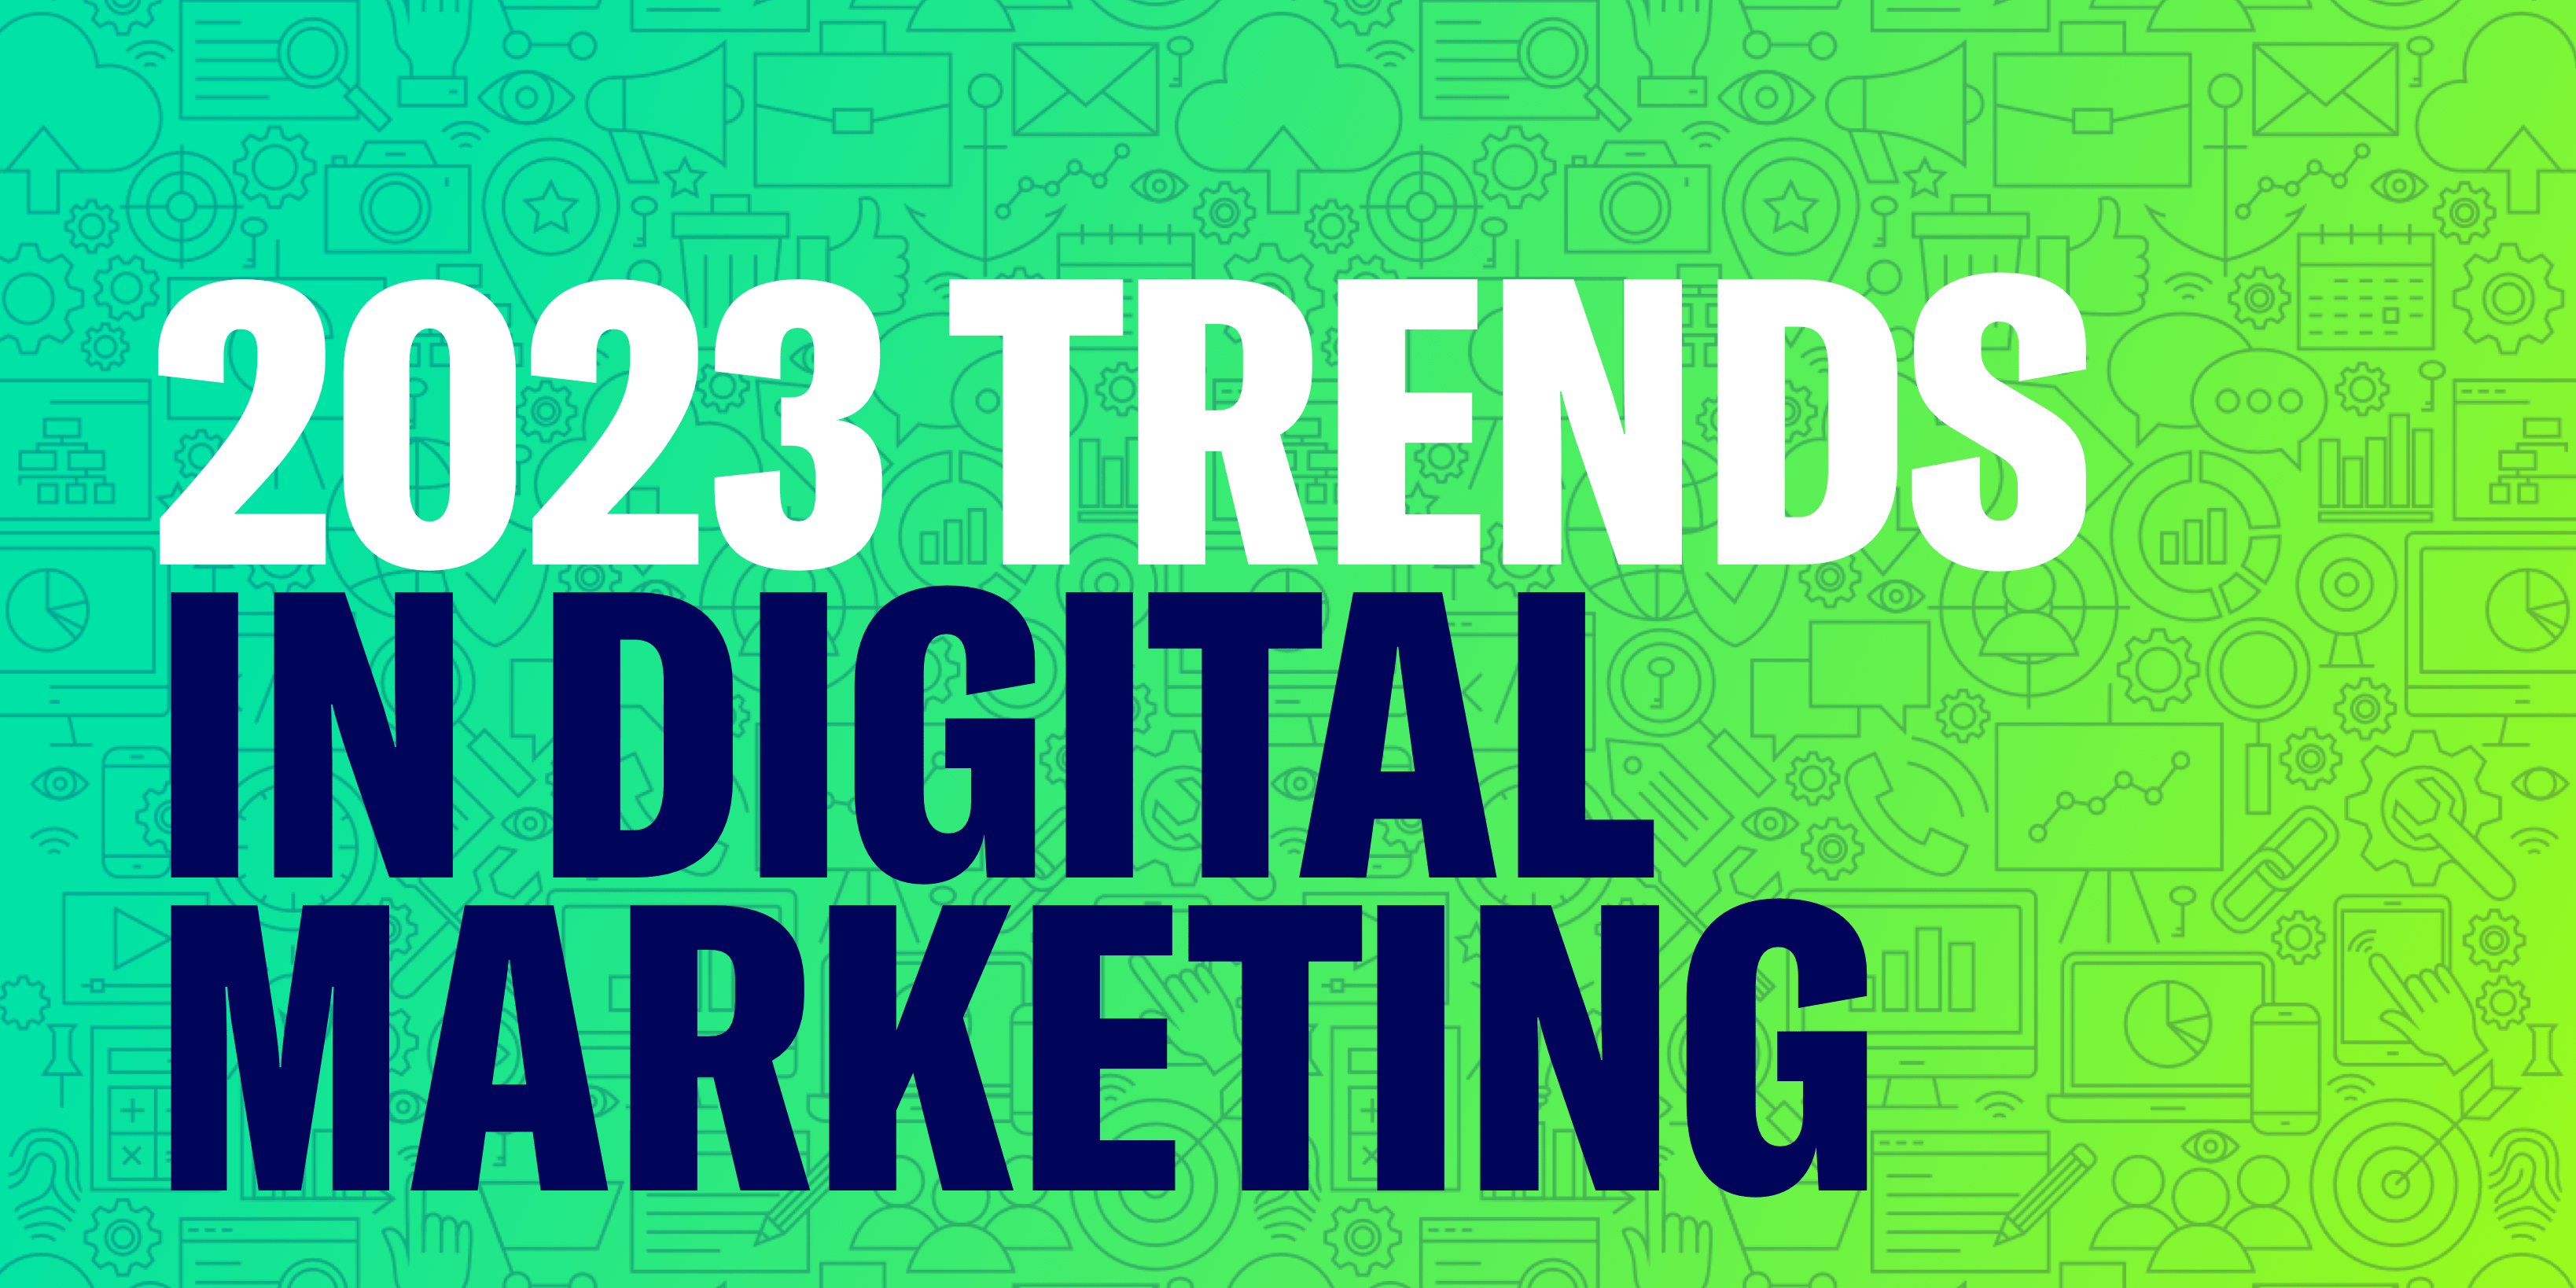 2023 Trends in Digital Marketing